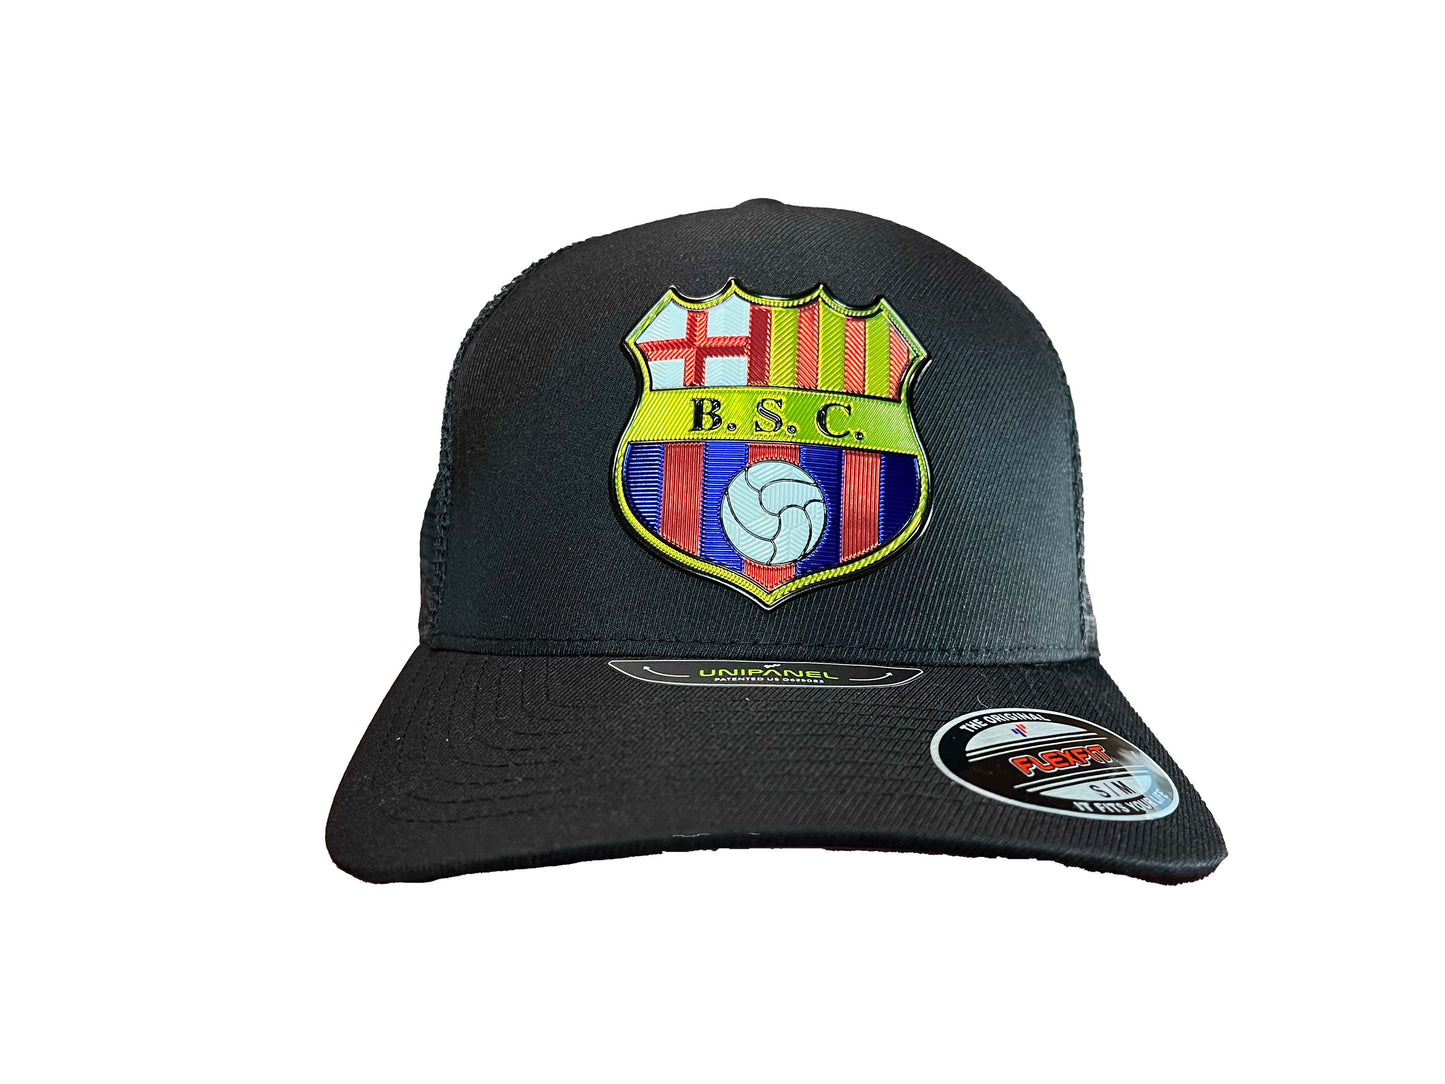 Flexfit Cap Barcelona Sporting Club Ecuador Made in USA